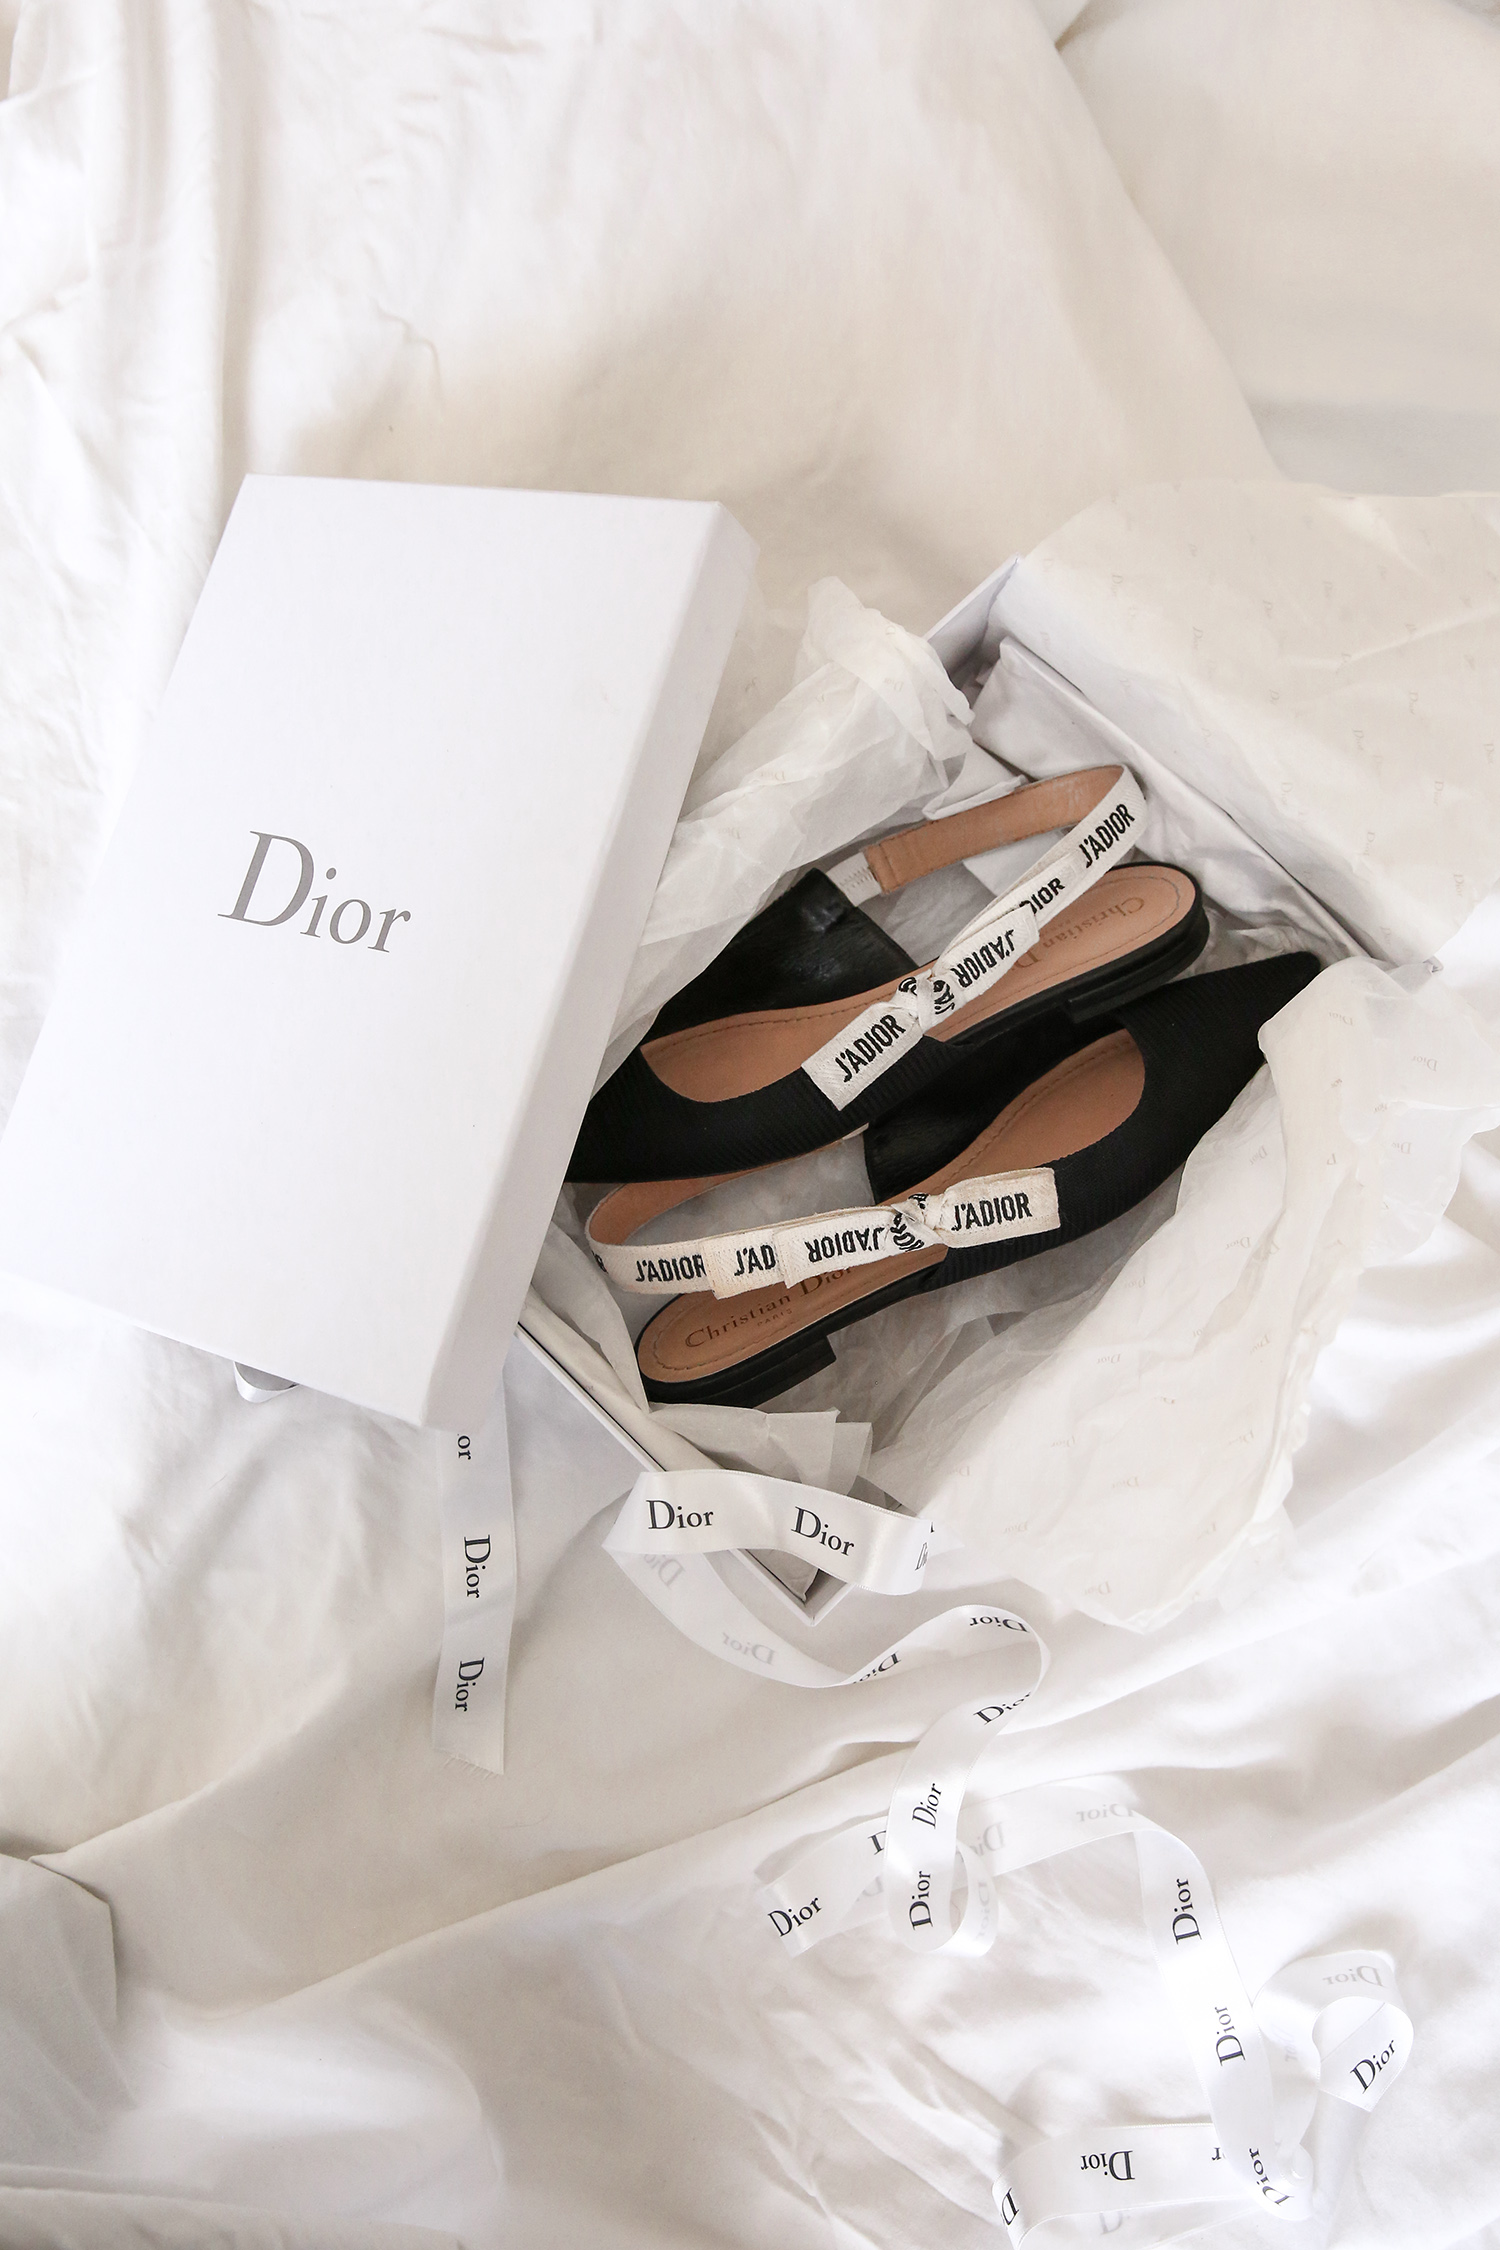 Dior Jadior Slingback Flats Review